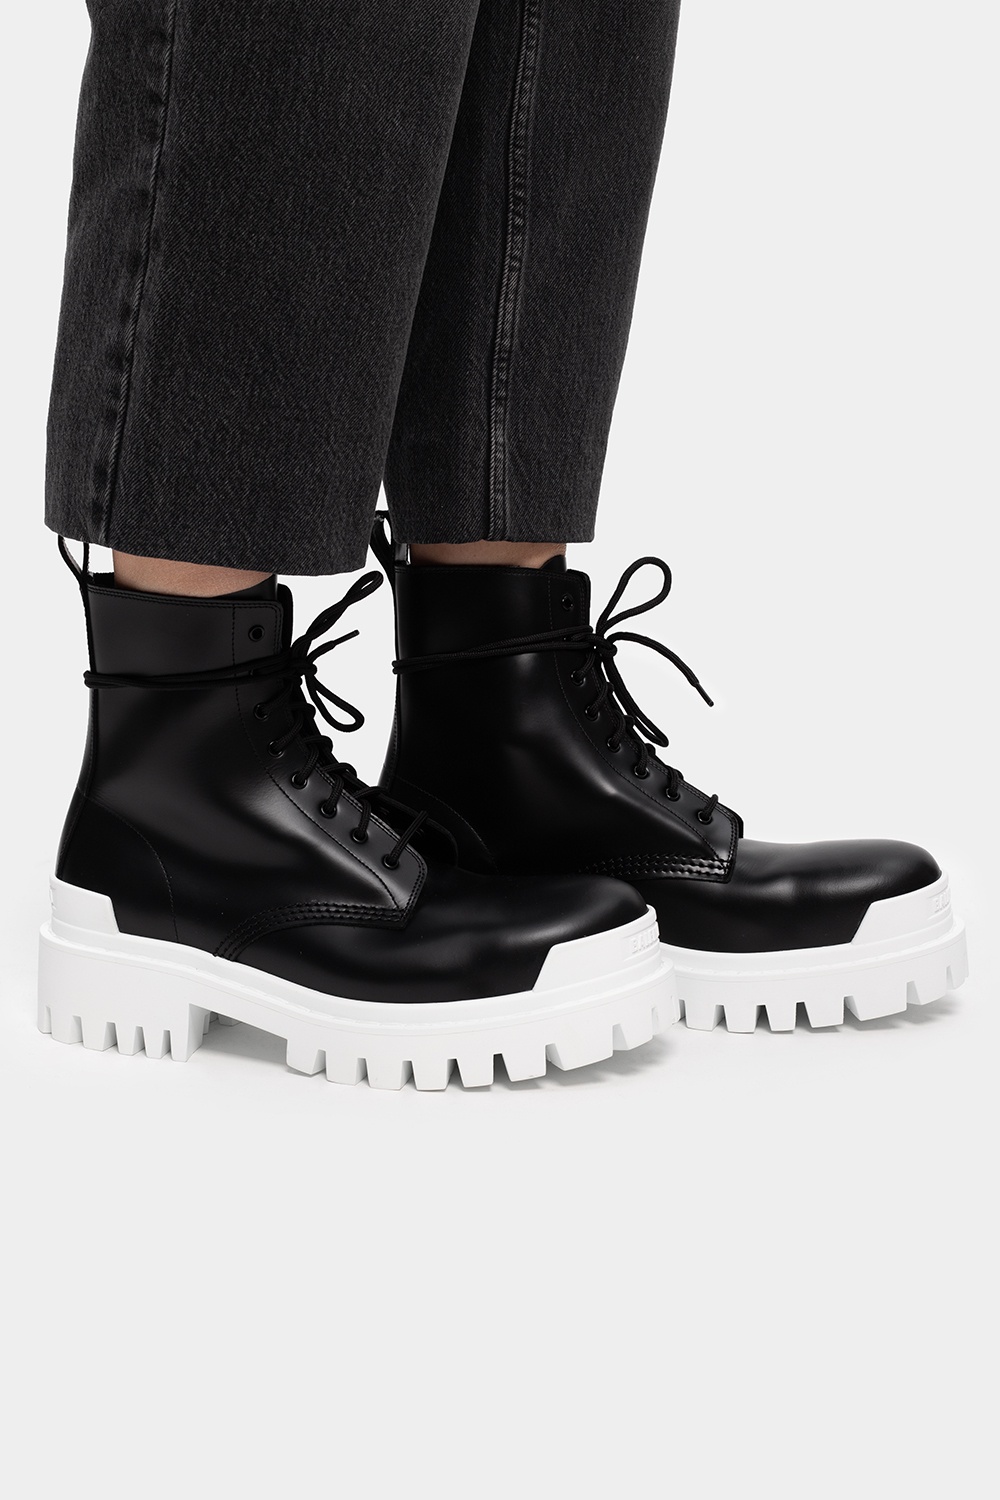 Balenciaga ‘Strike’ leather boots